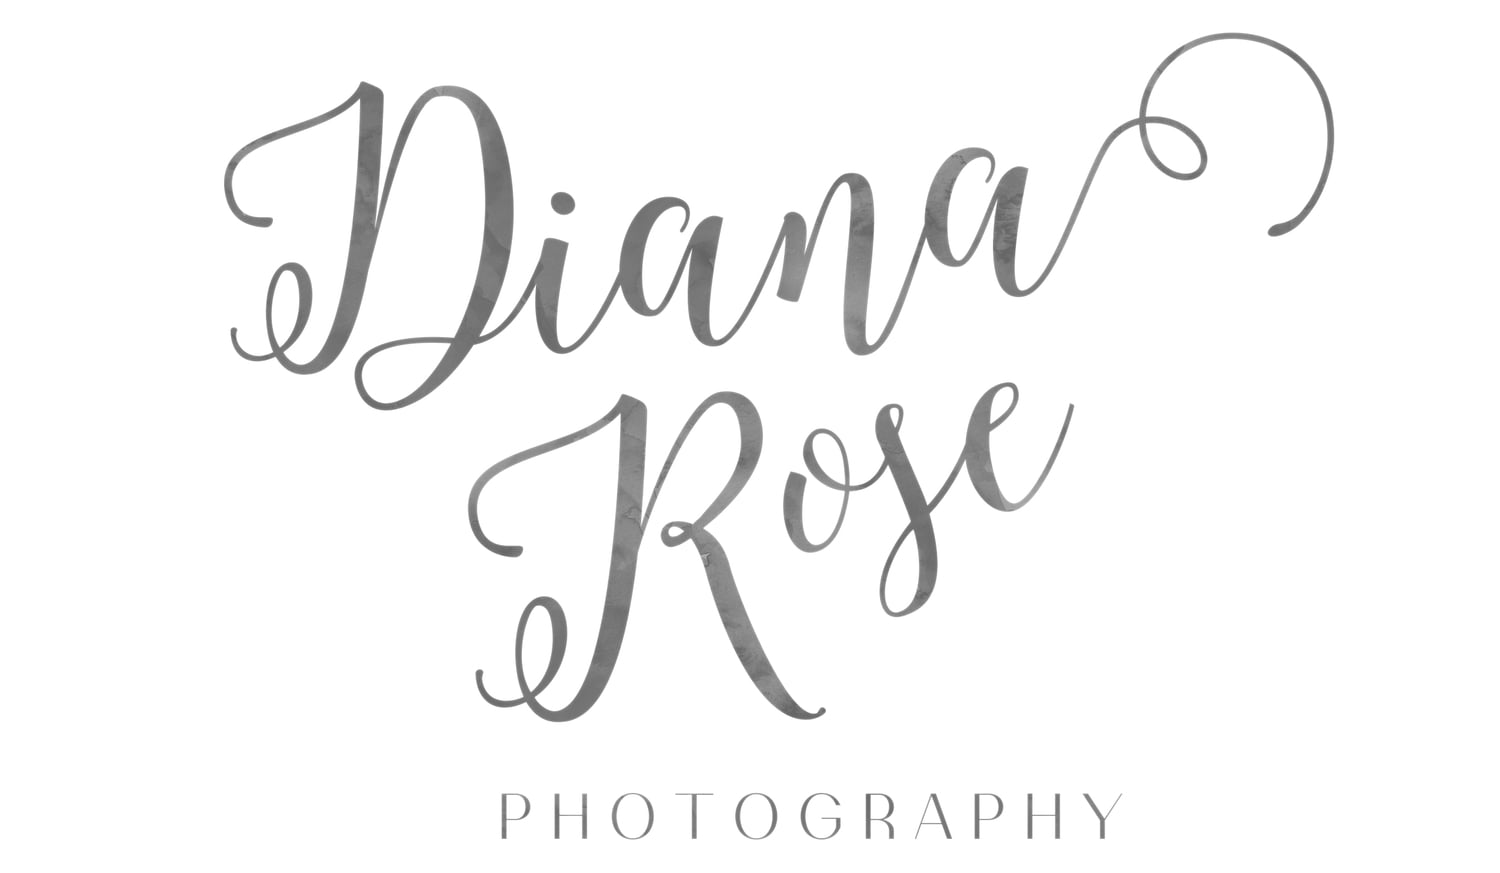 Southeastern North Carolina Photographer | Diana Rose Photography